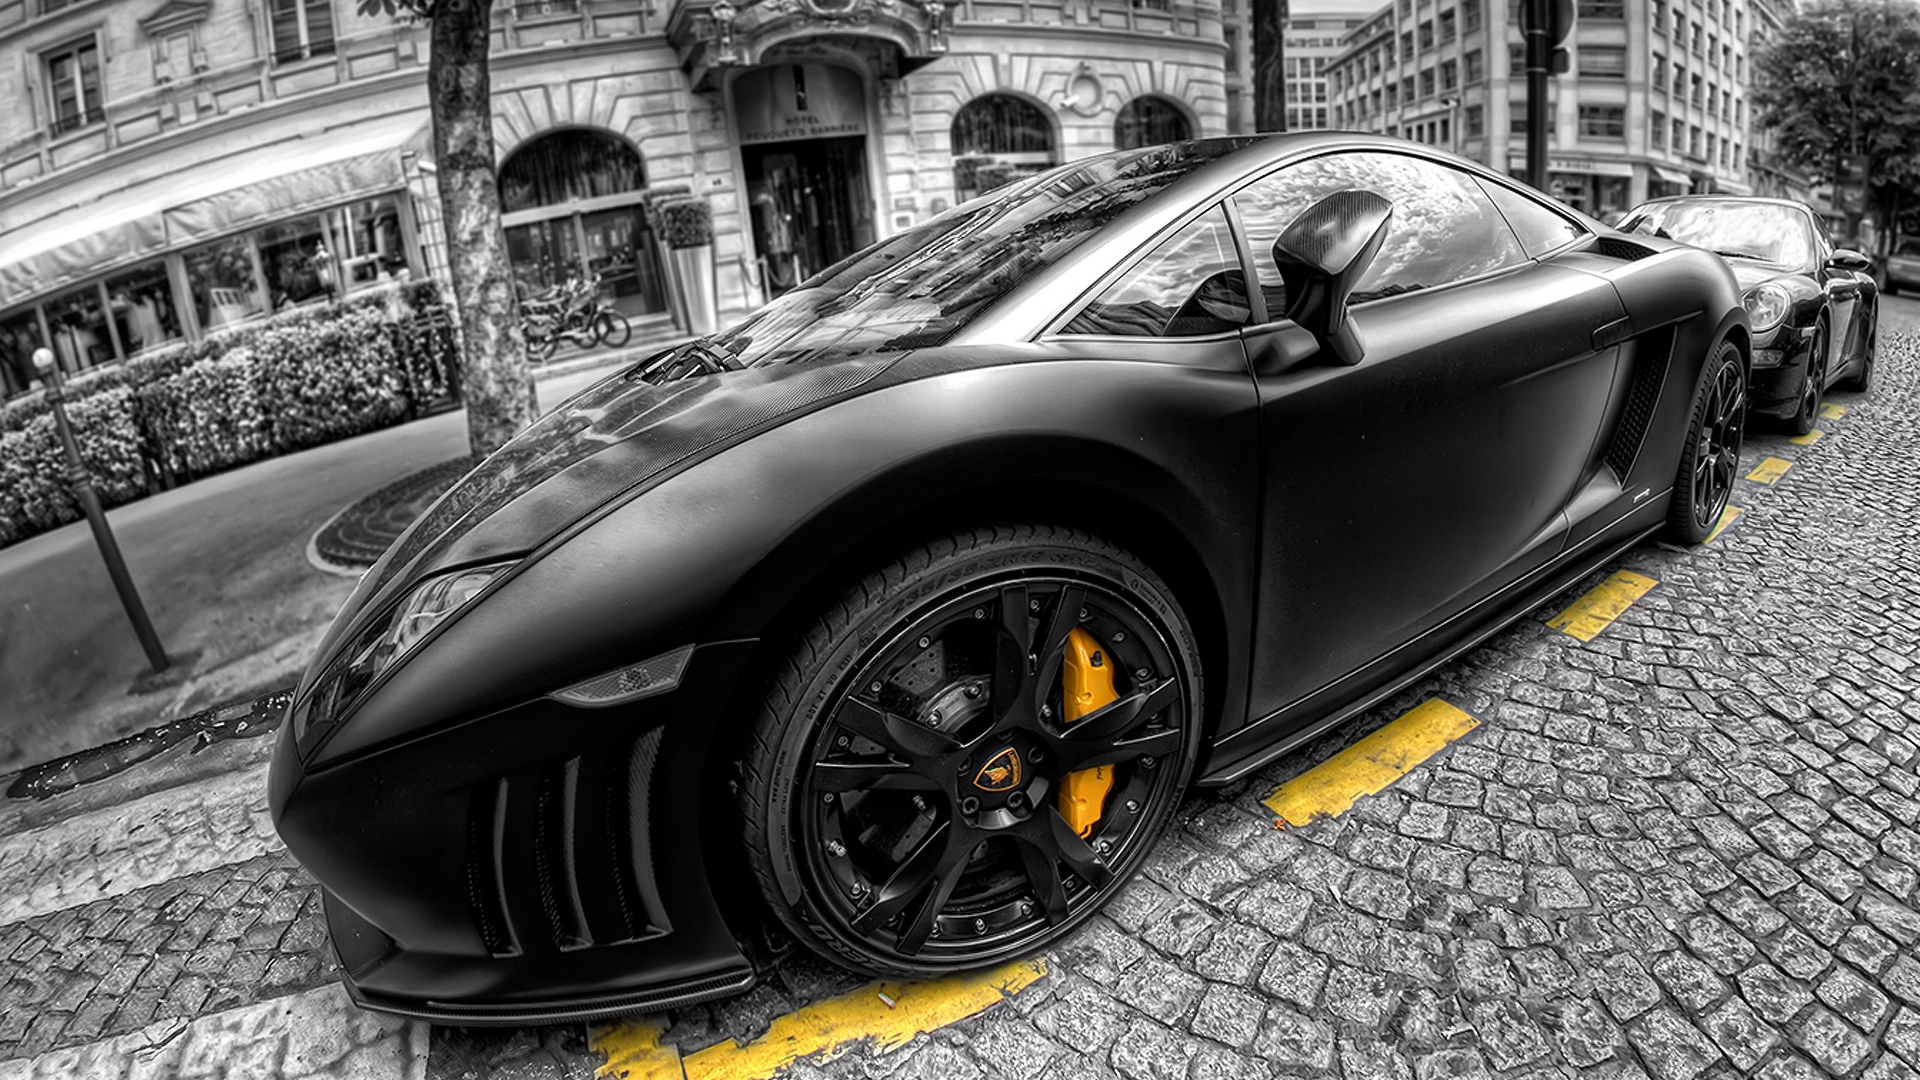 Lamborghini Gallardo Black for 1920 x 1080 HDTV 1080p resolution